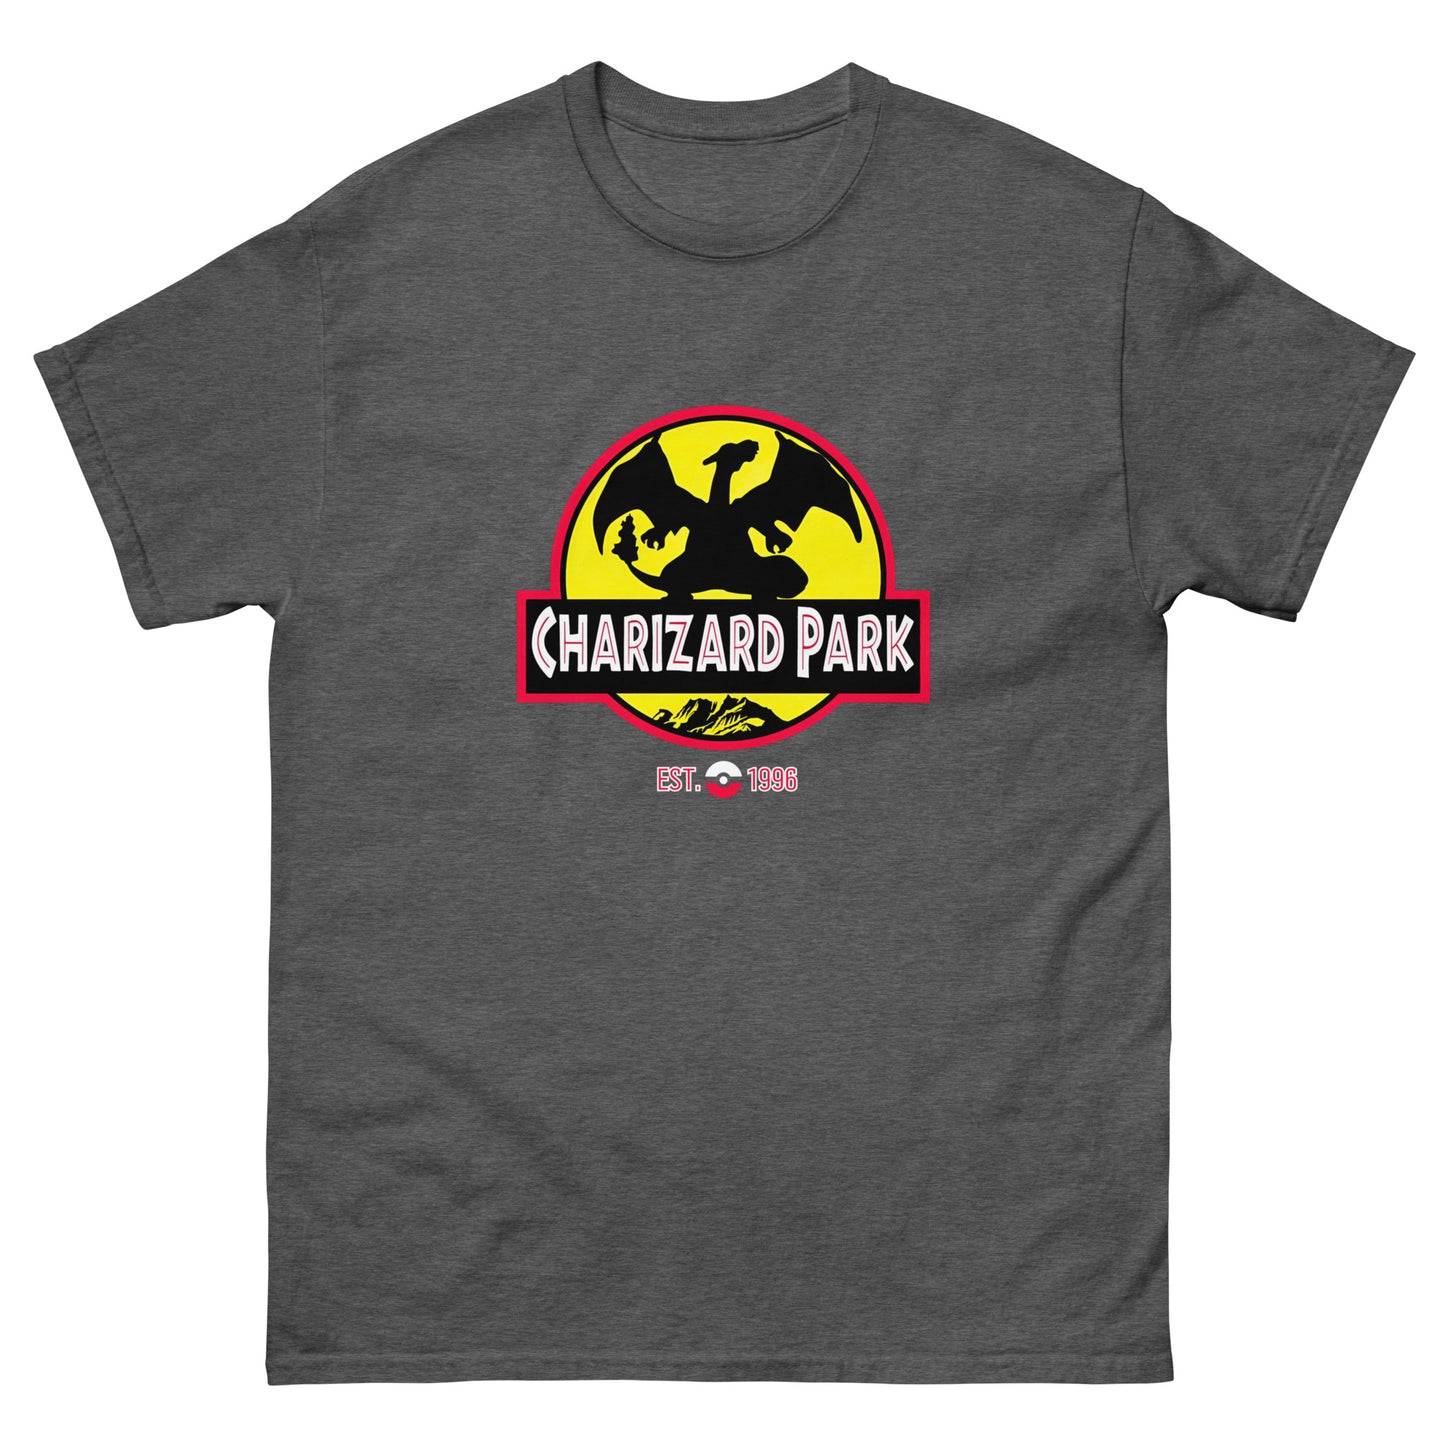 Charizard Park T-Shirt